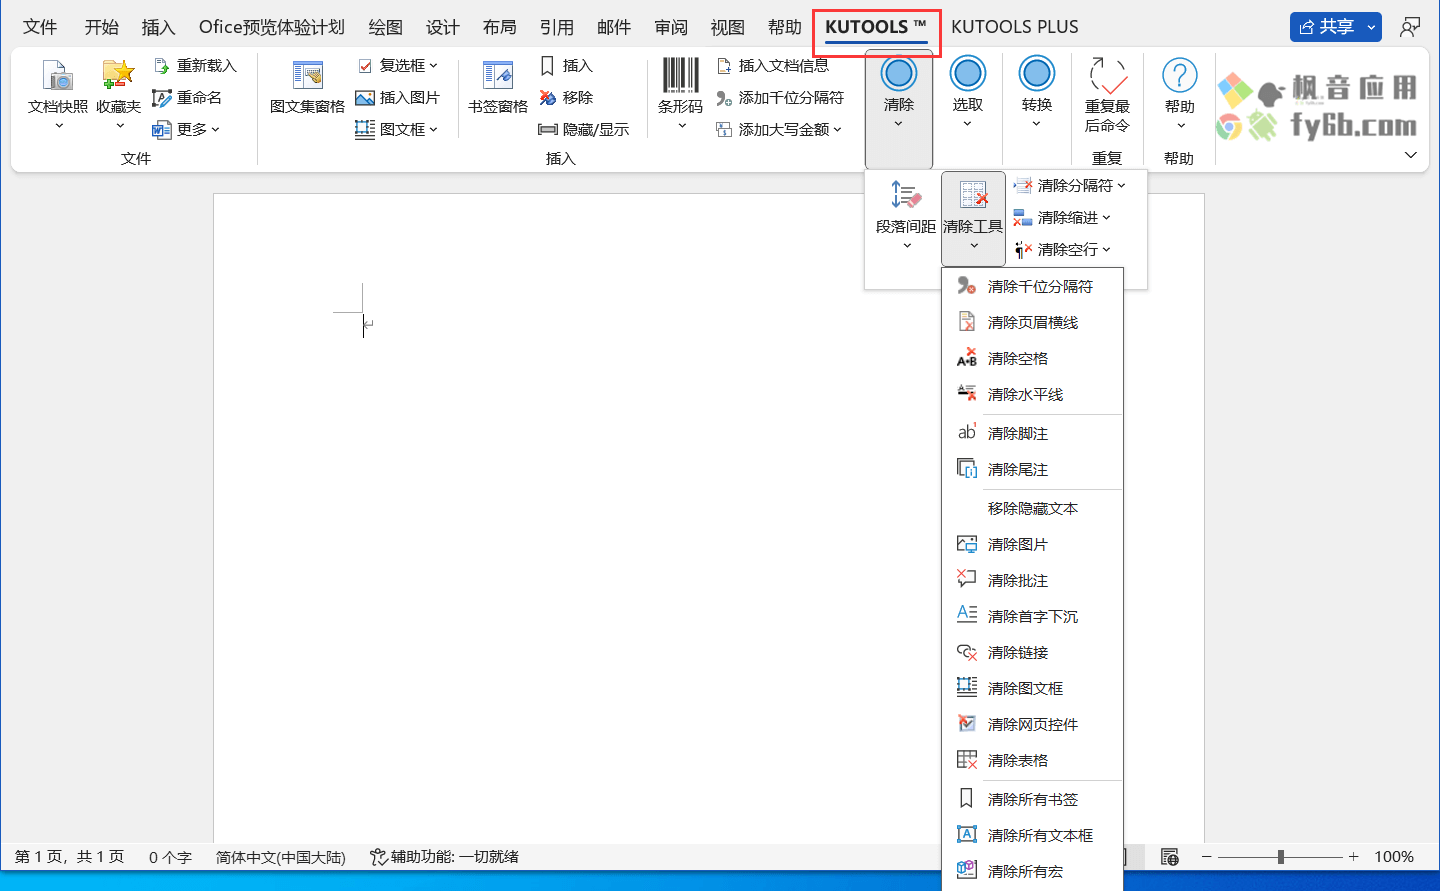 Windows Kutools for Word 文档插件_v11.0